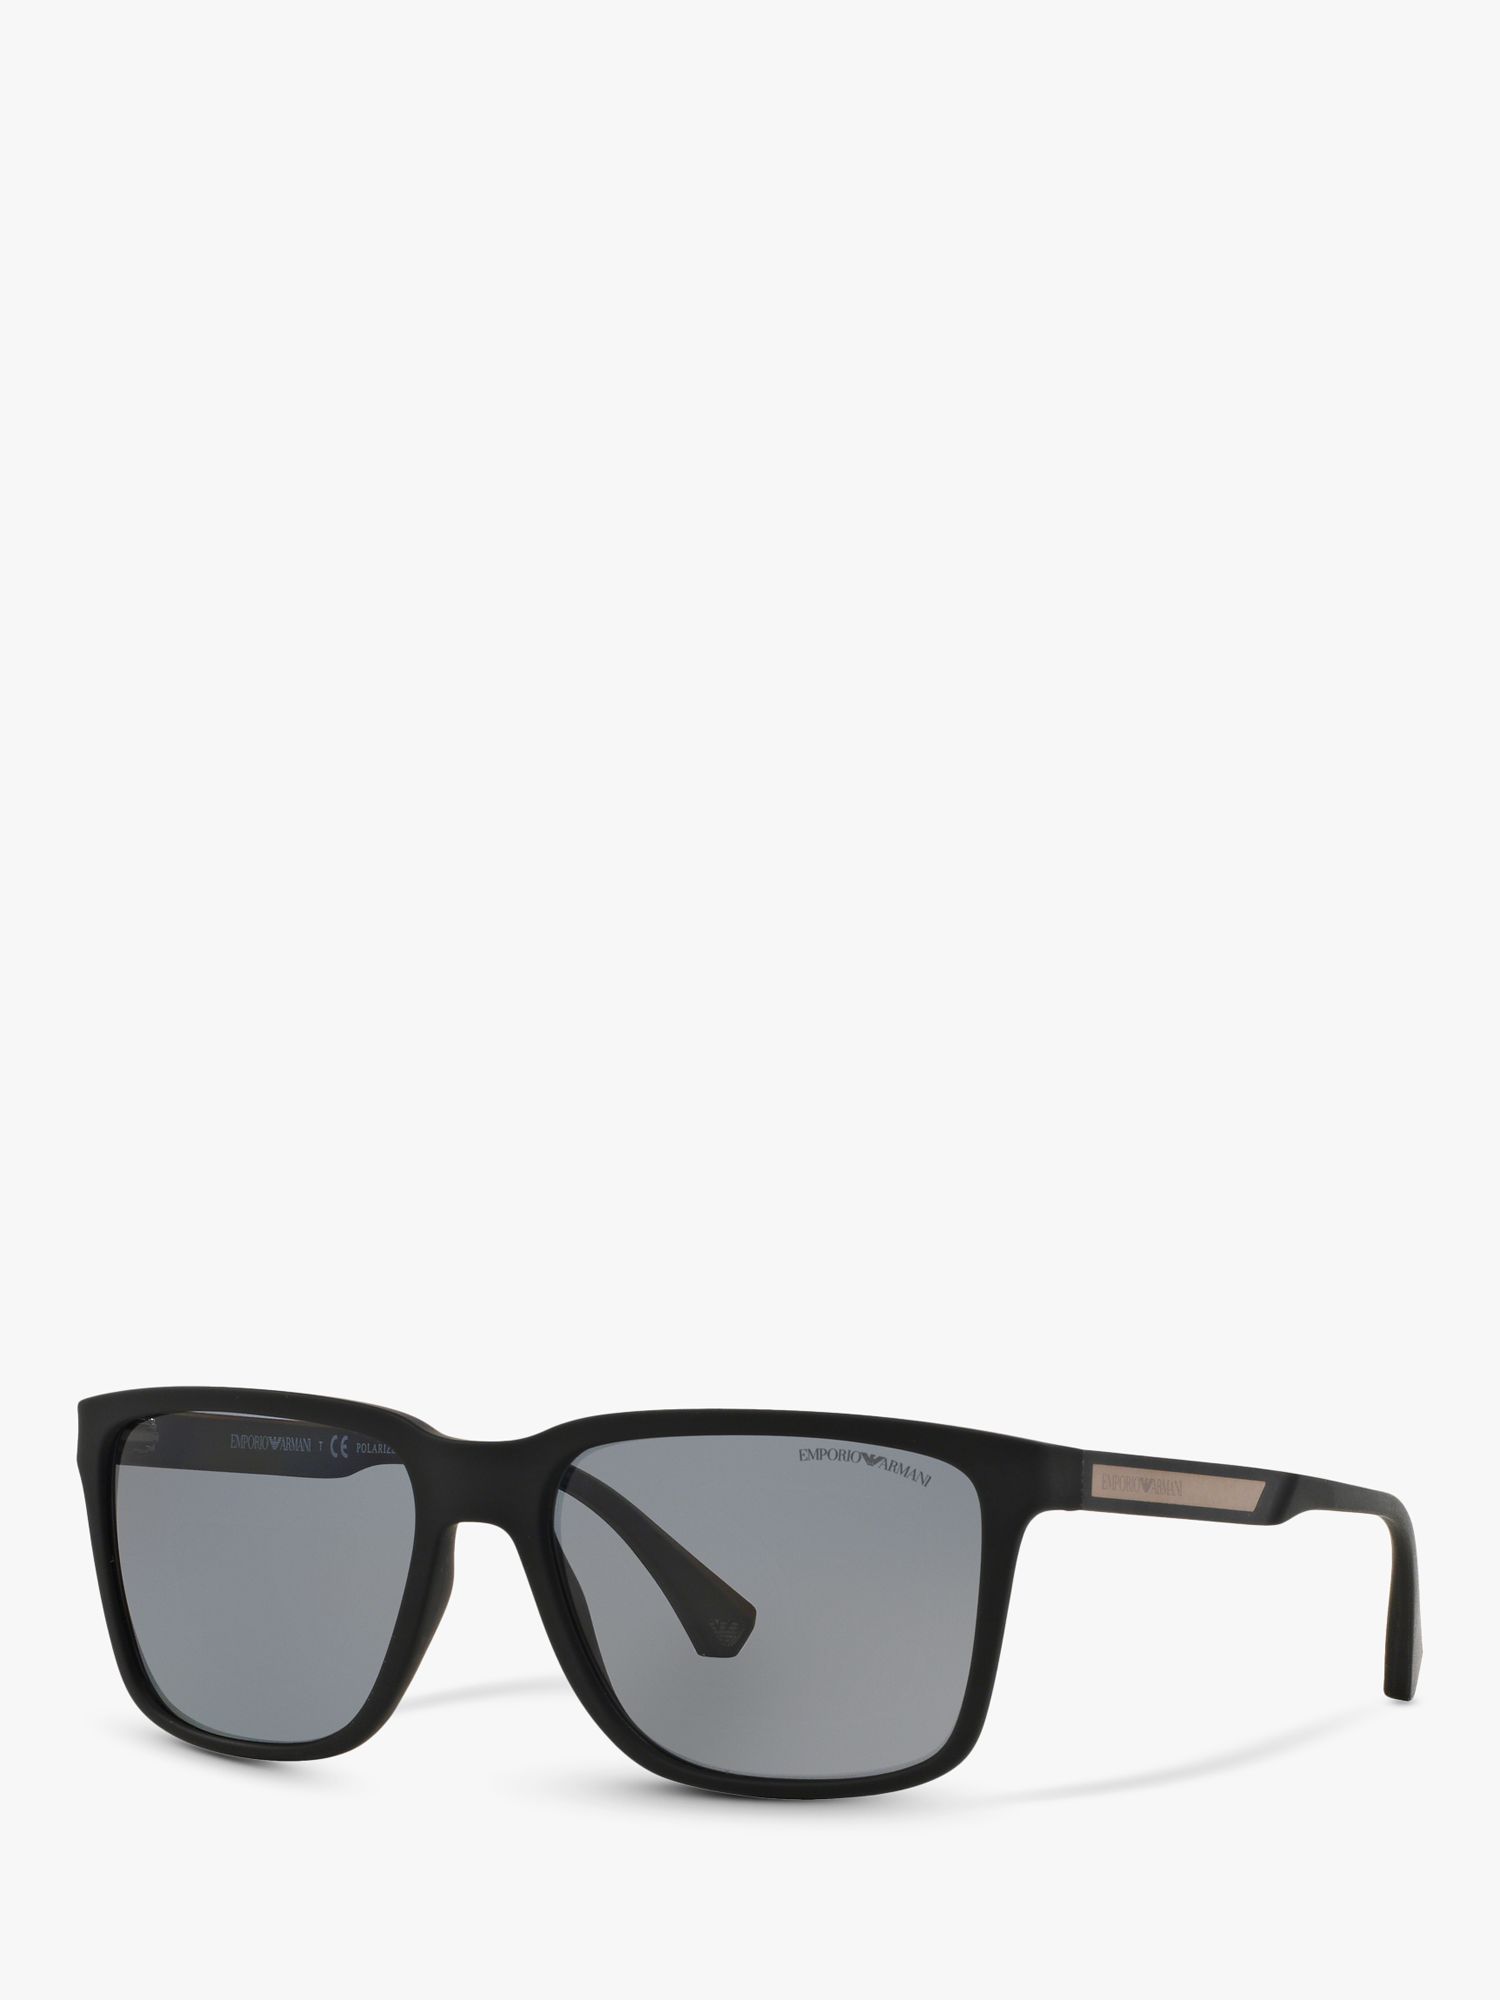 Emporio Armani EA4047 Men's Square Polarised Sunglasses, Rubber Black/Grey  at John Lewis & Partners